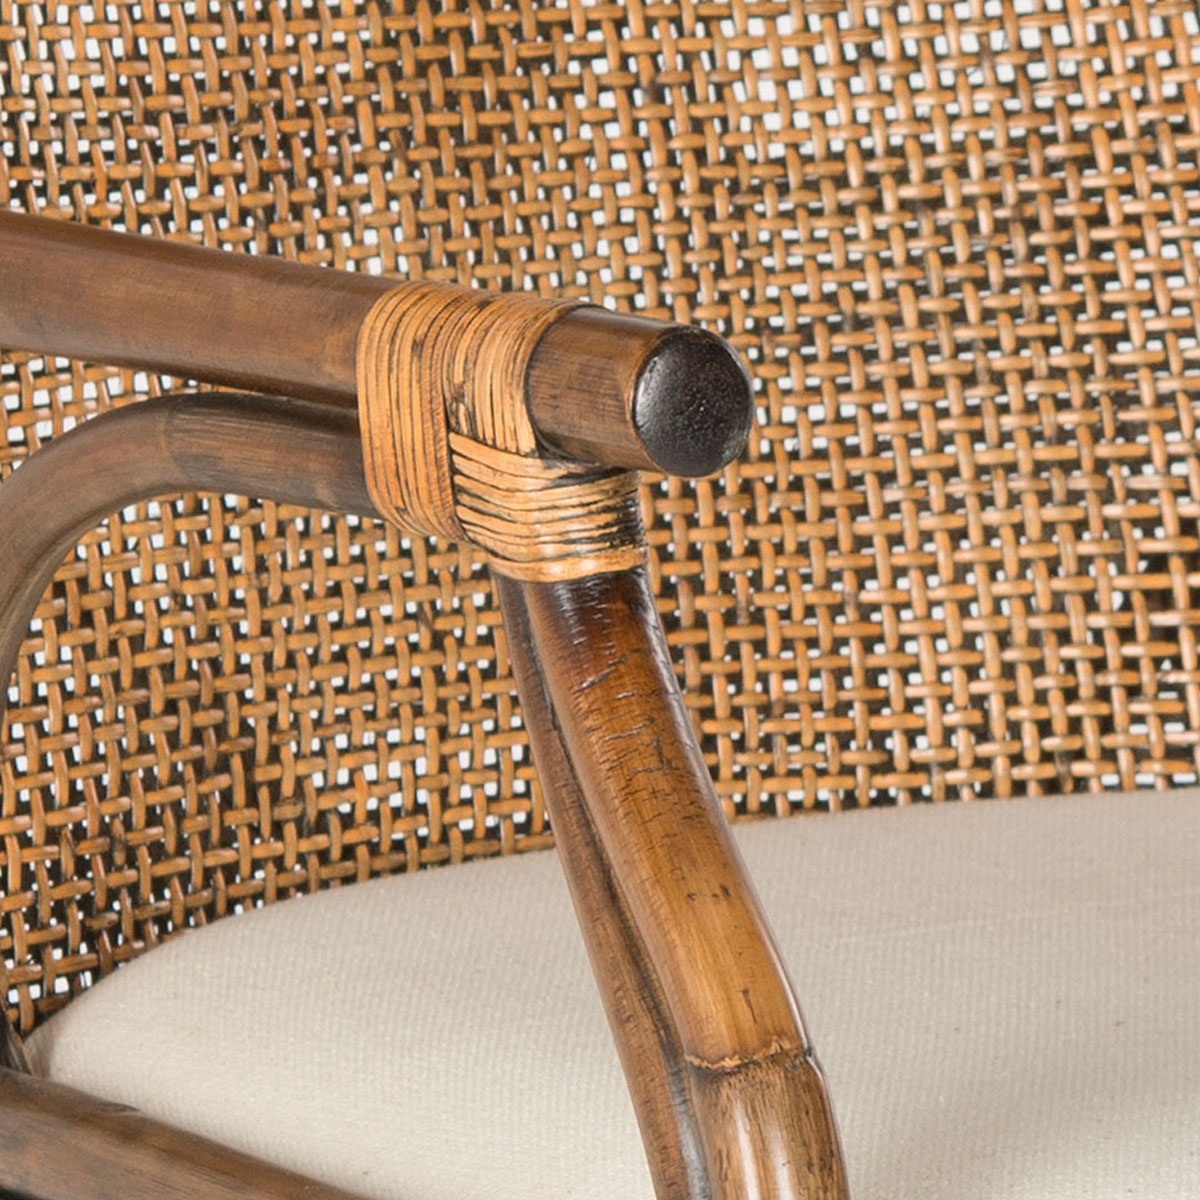 Gianni Arm Chair - Brown/White - Arlo Home - Image 1